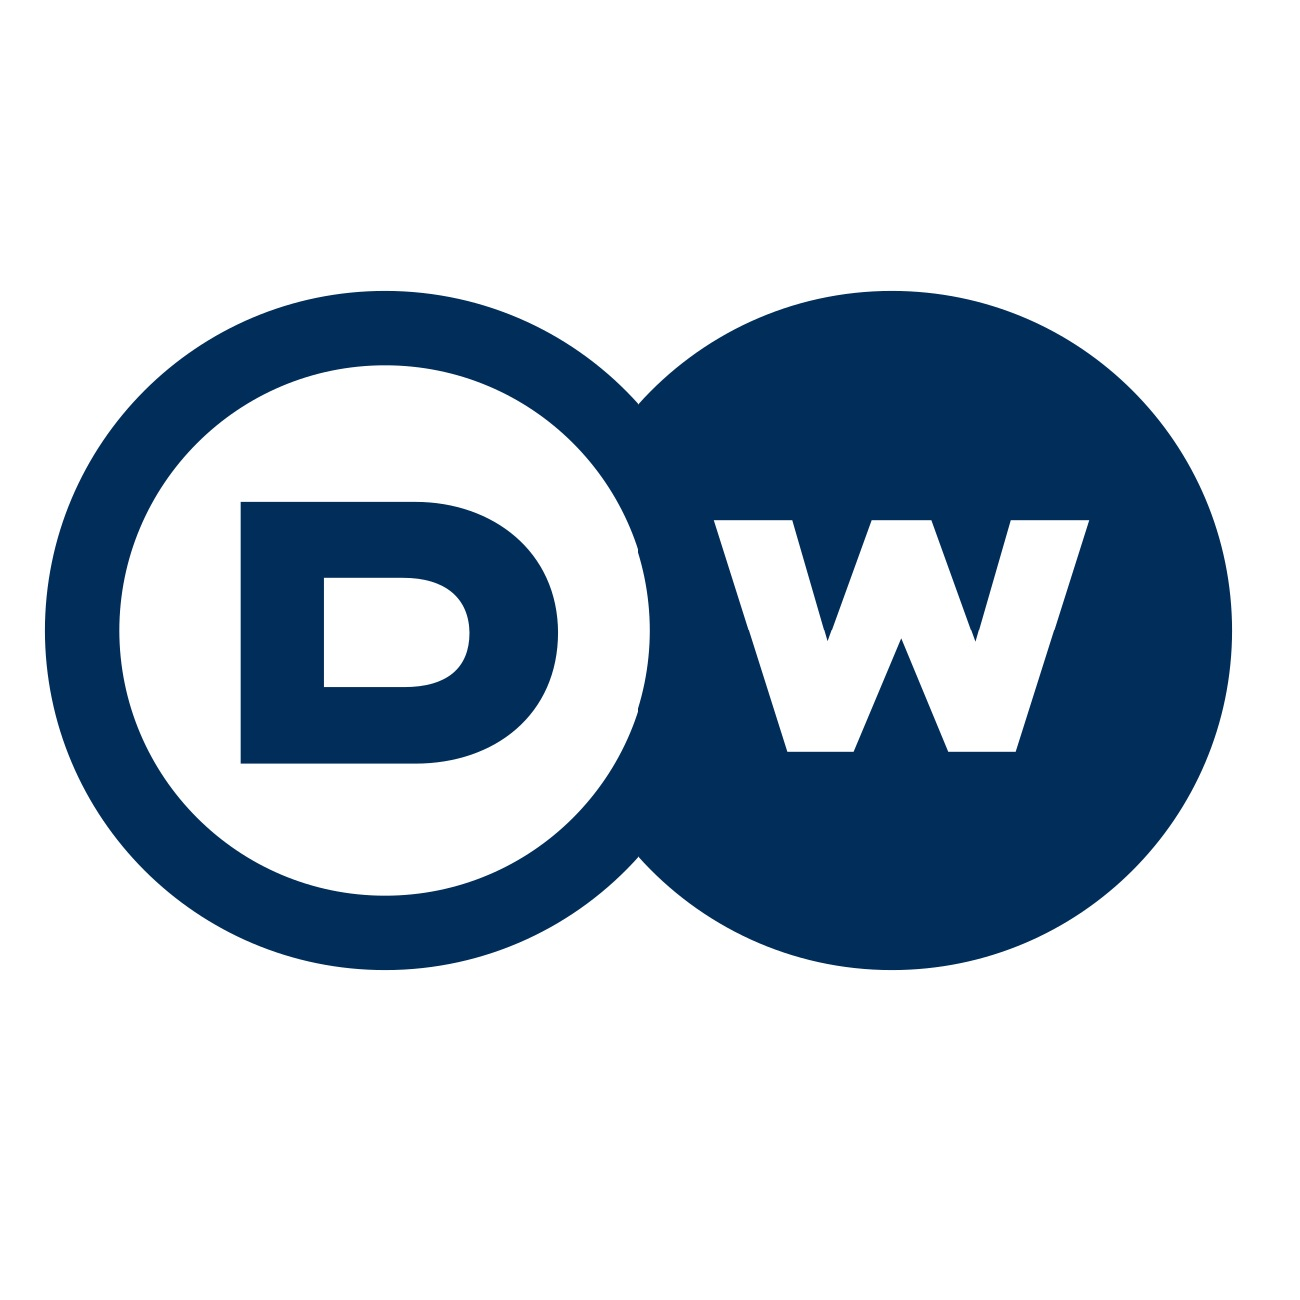 Deutsche Welle explores news & views inside Europe